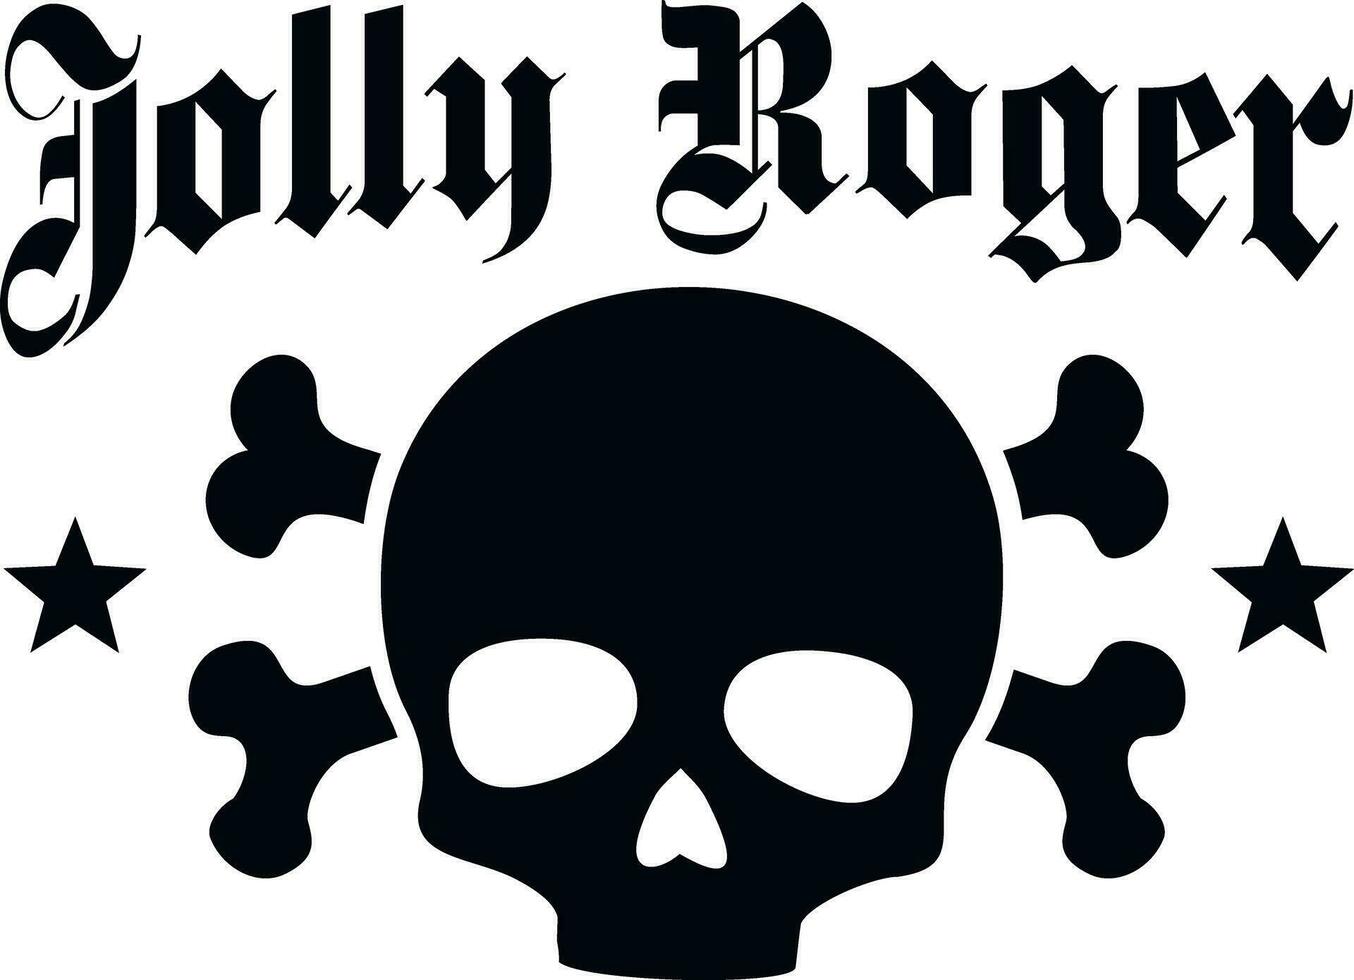 Pirat skull Jolly Roger, grunge vintage design t shirts vector